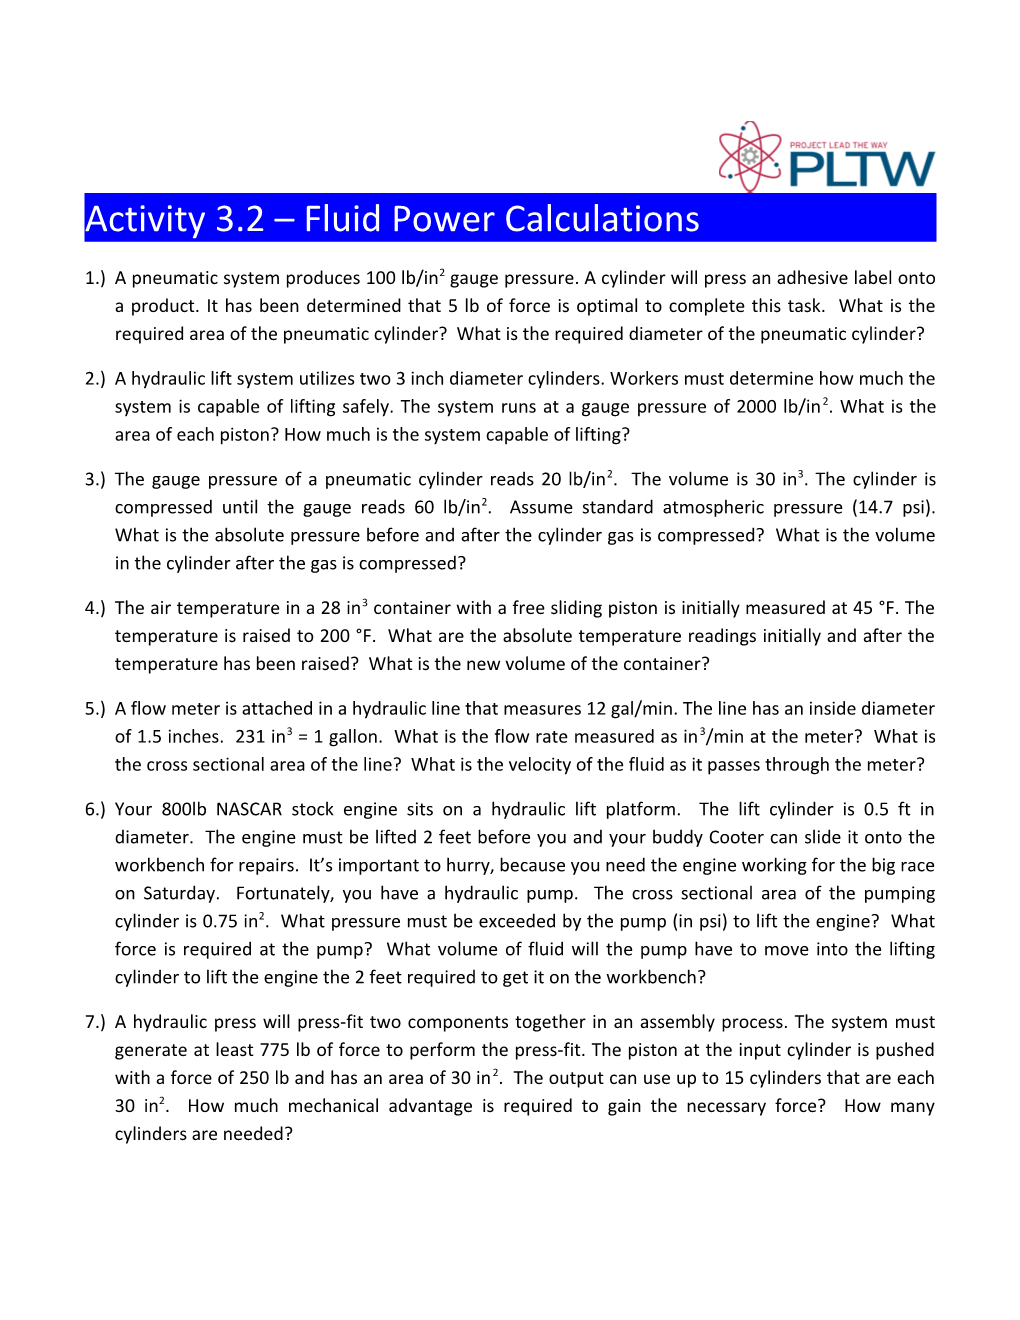 Activity 3.2 Fluid Power Calculations